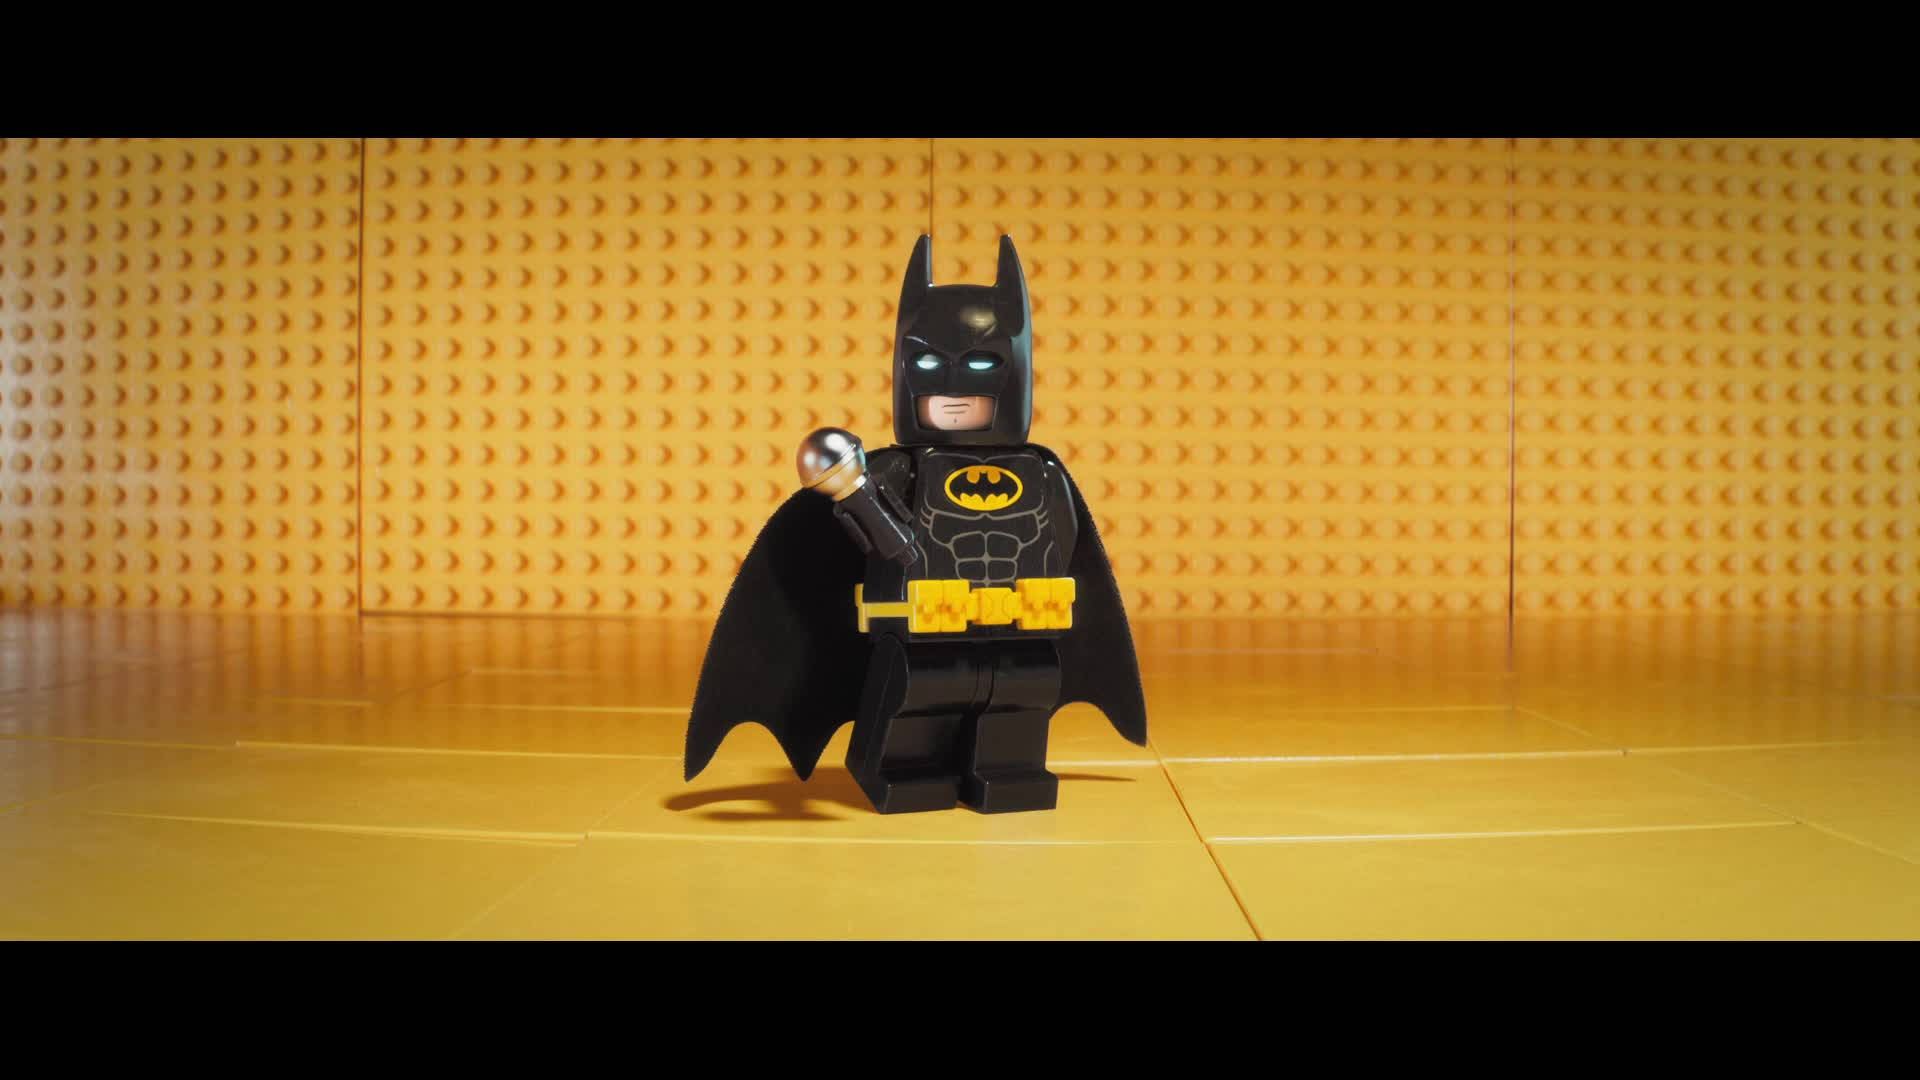 Photoshoot Of The Lego Batman Movie's Superhero Background